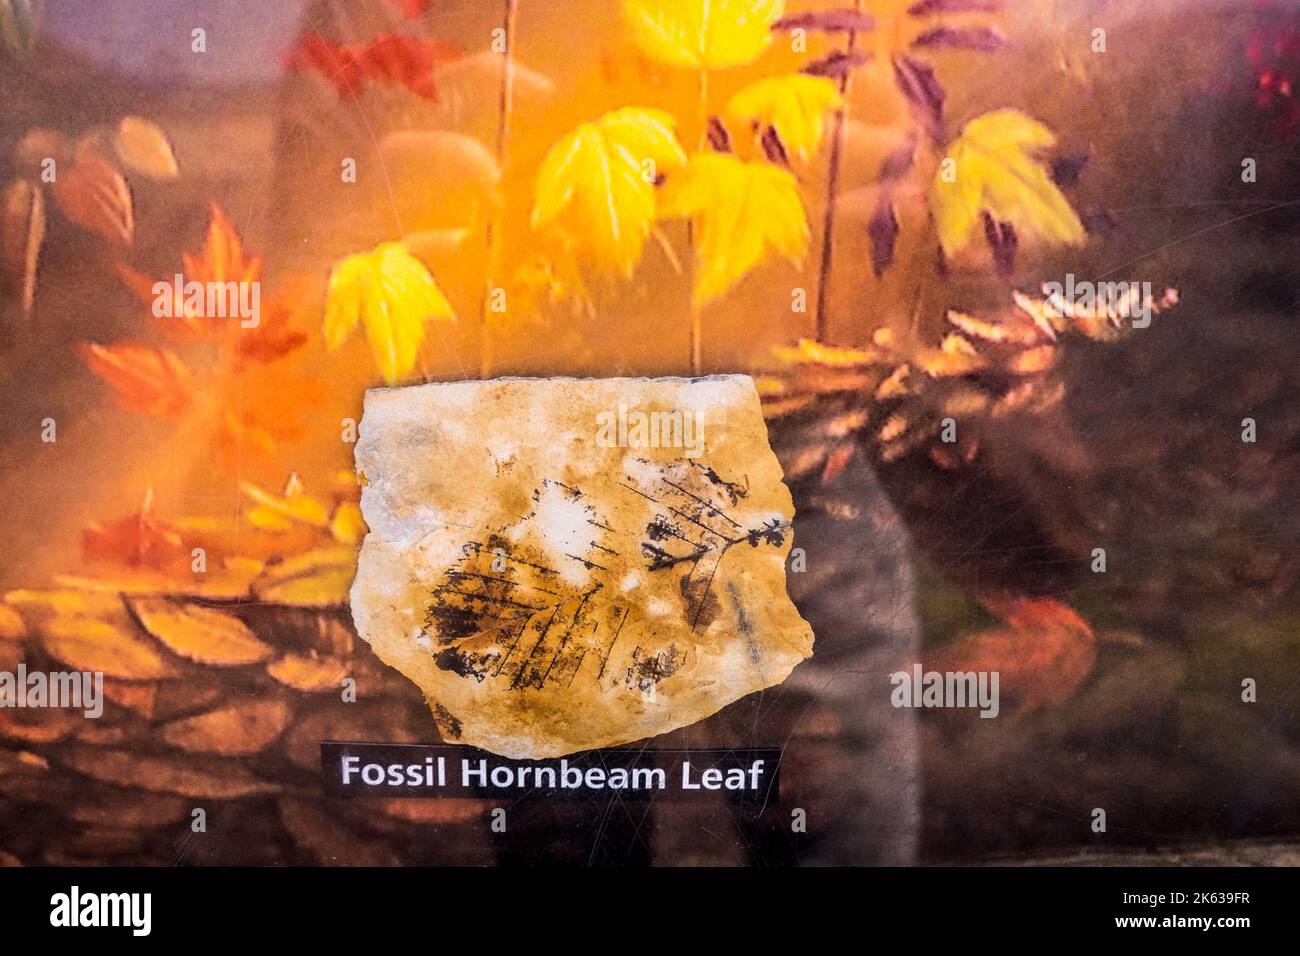 Fossil hornbeam leaf, John Day Fossil Beds National Monument, Oregon, USA Stock Photo